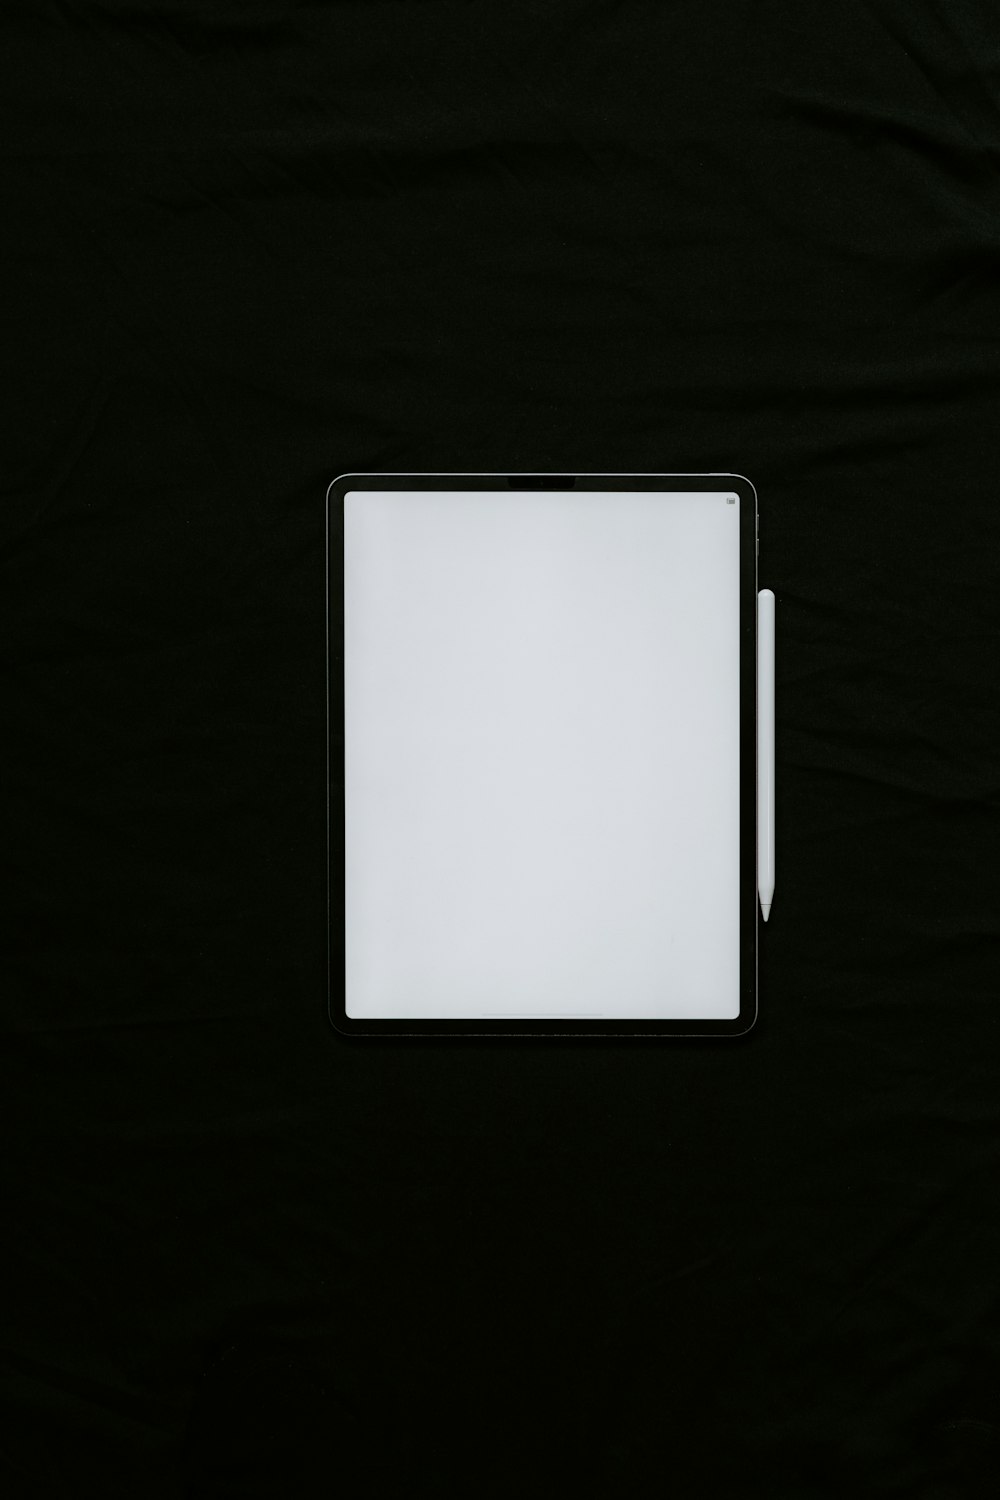 white rectangular device on black textile